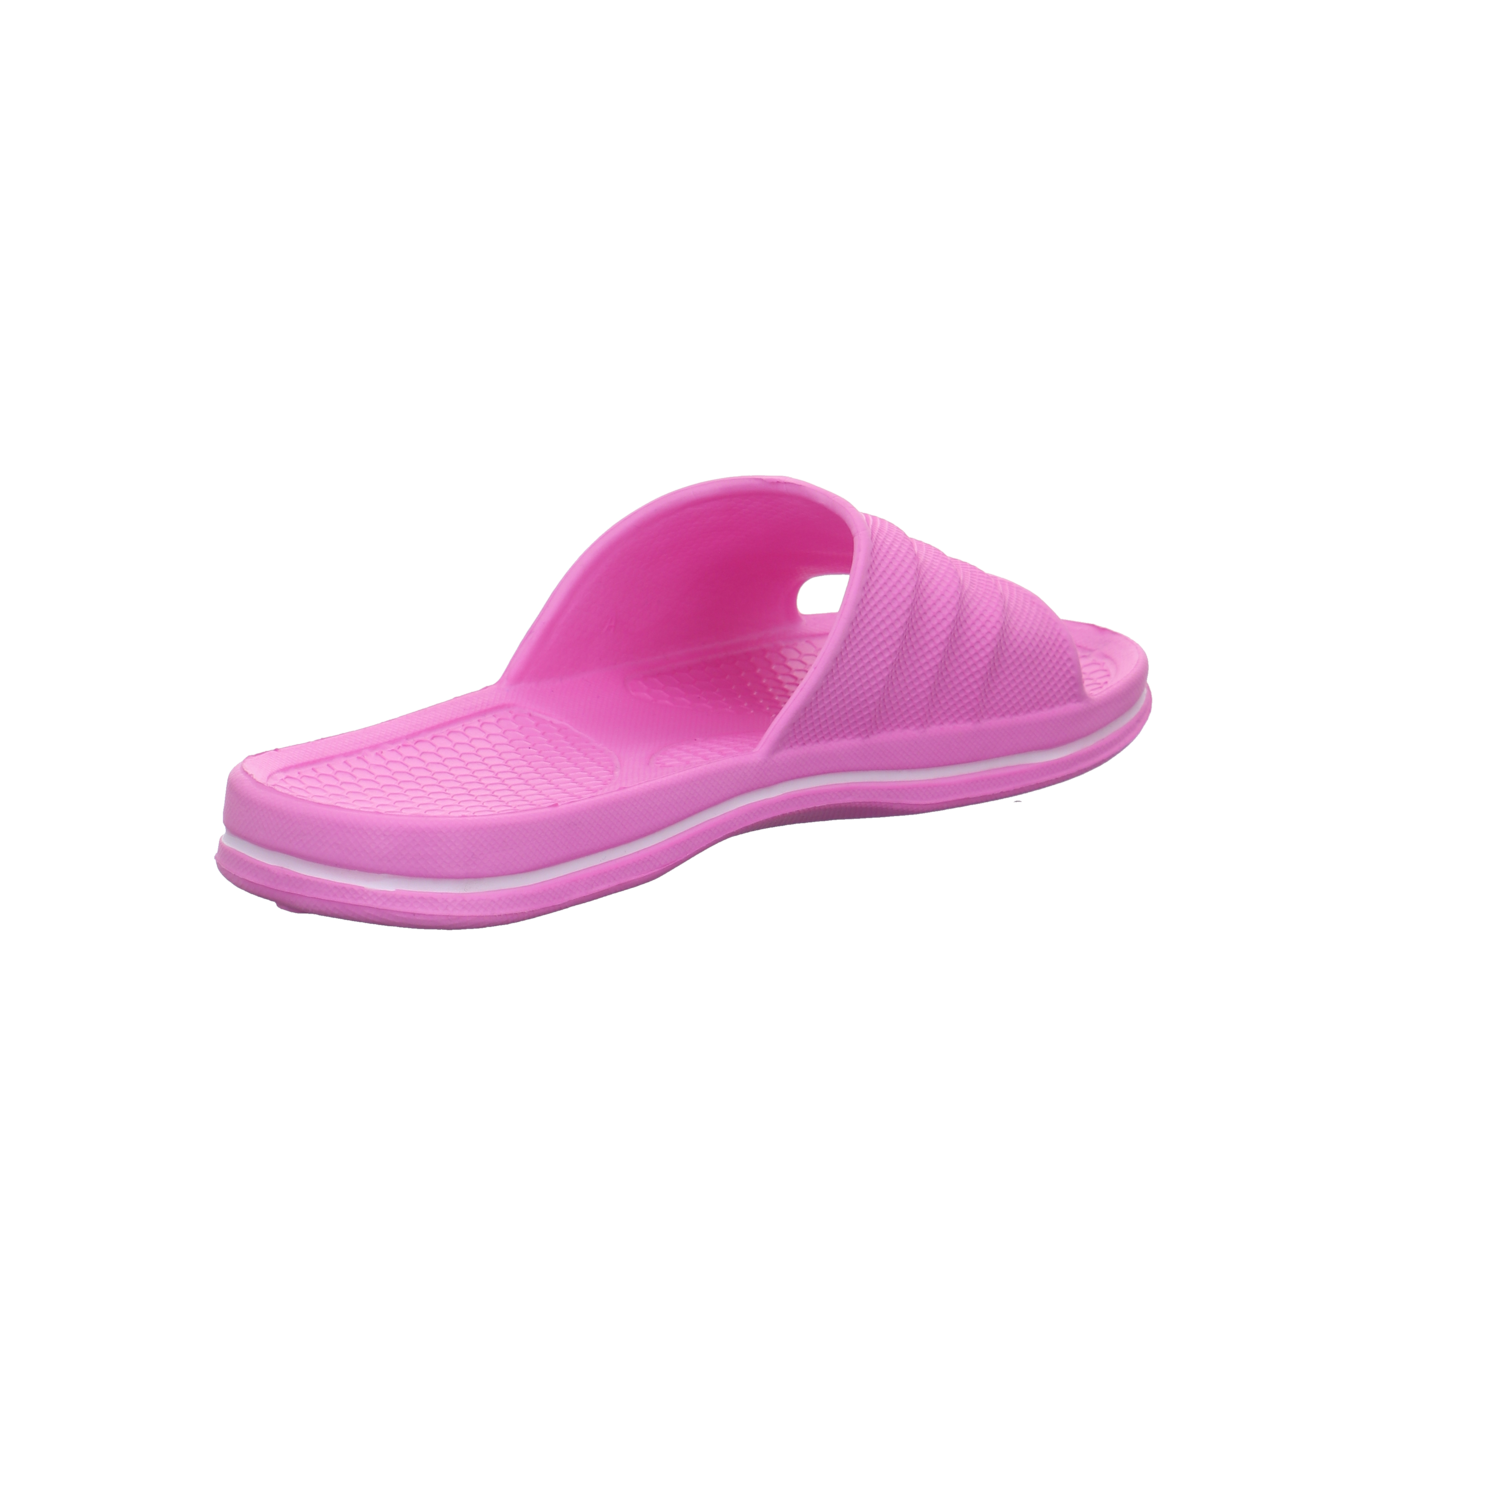 Herold Schuhe  pink Bild5